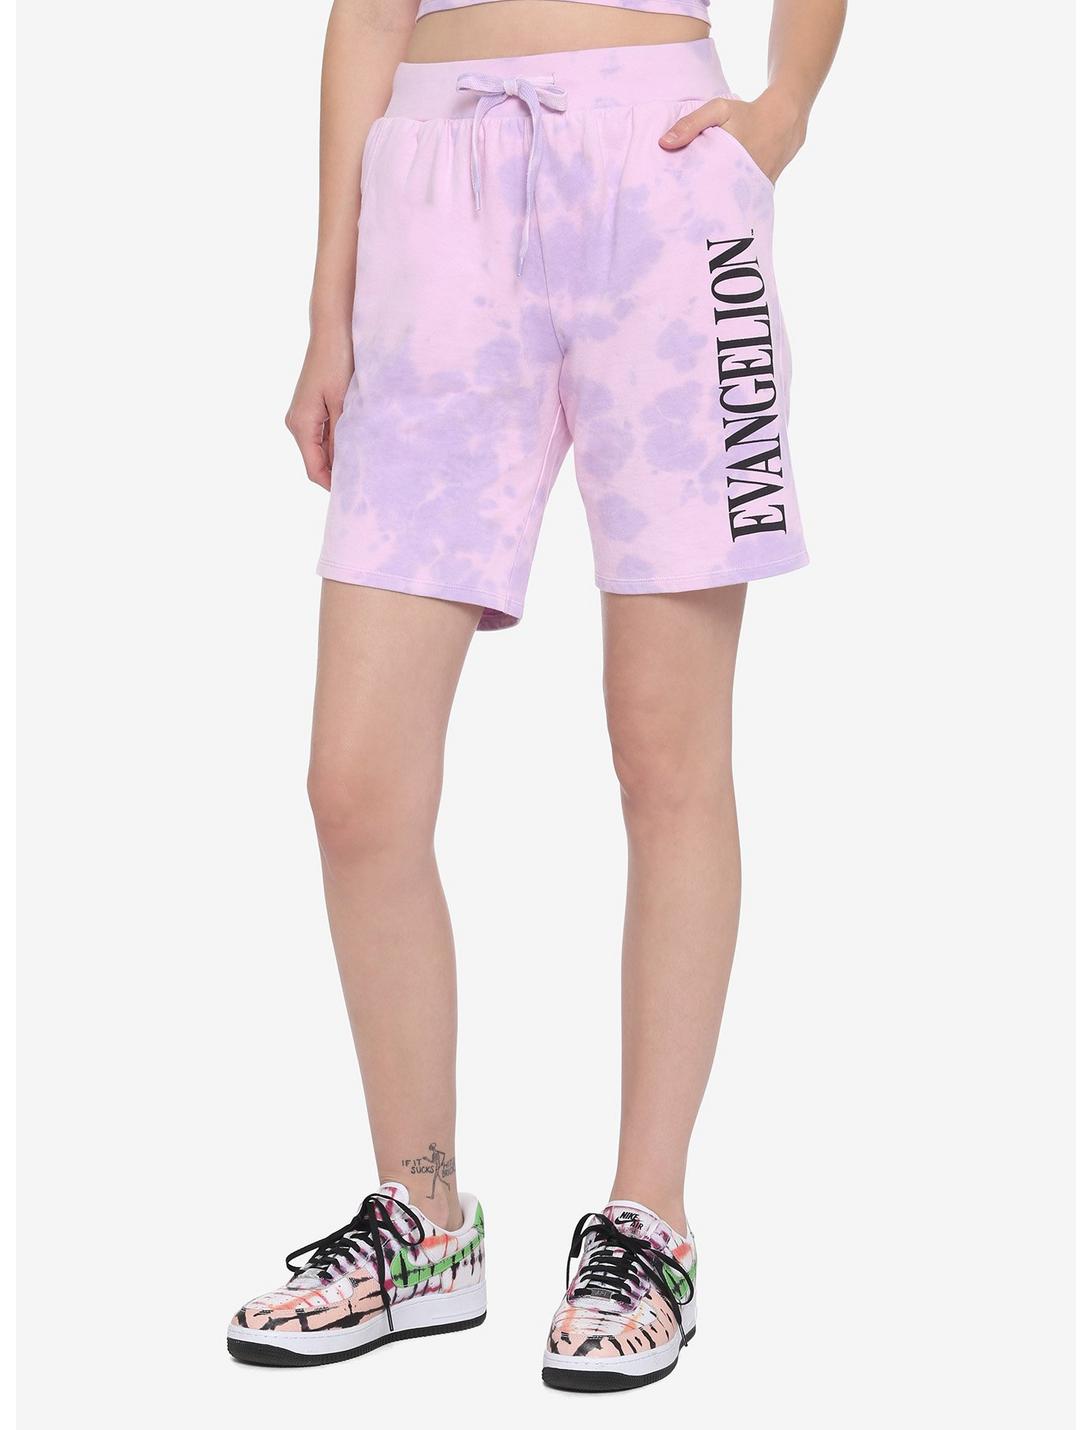 Neon Genesis Evangelion Tie-Dye Girls Lounge Shorts, MULTI, hi-res